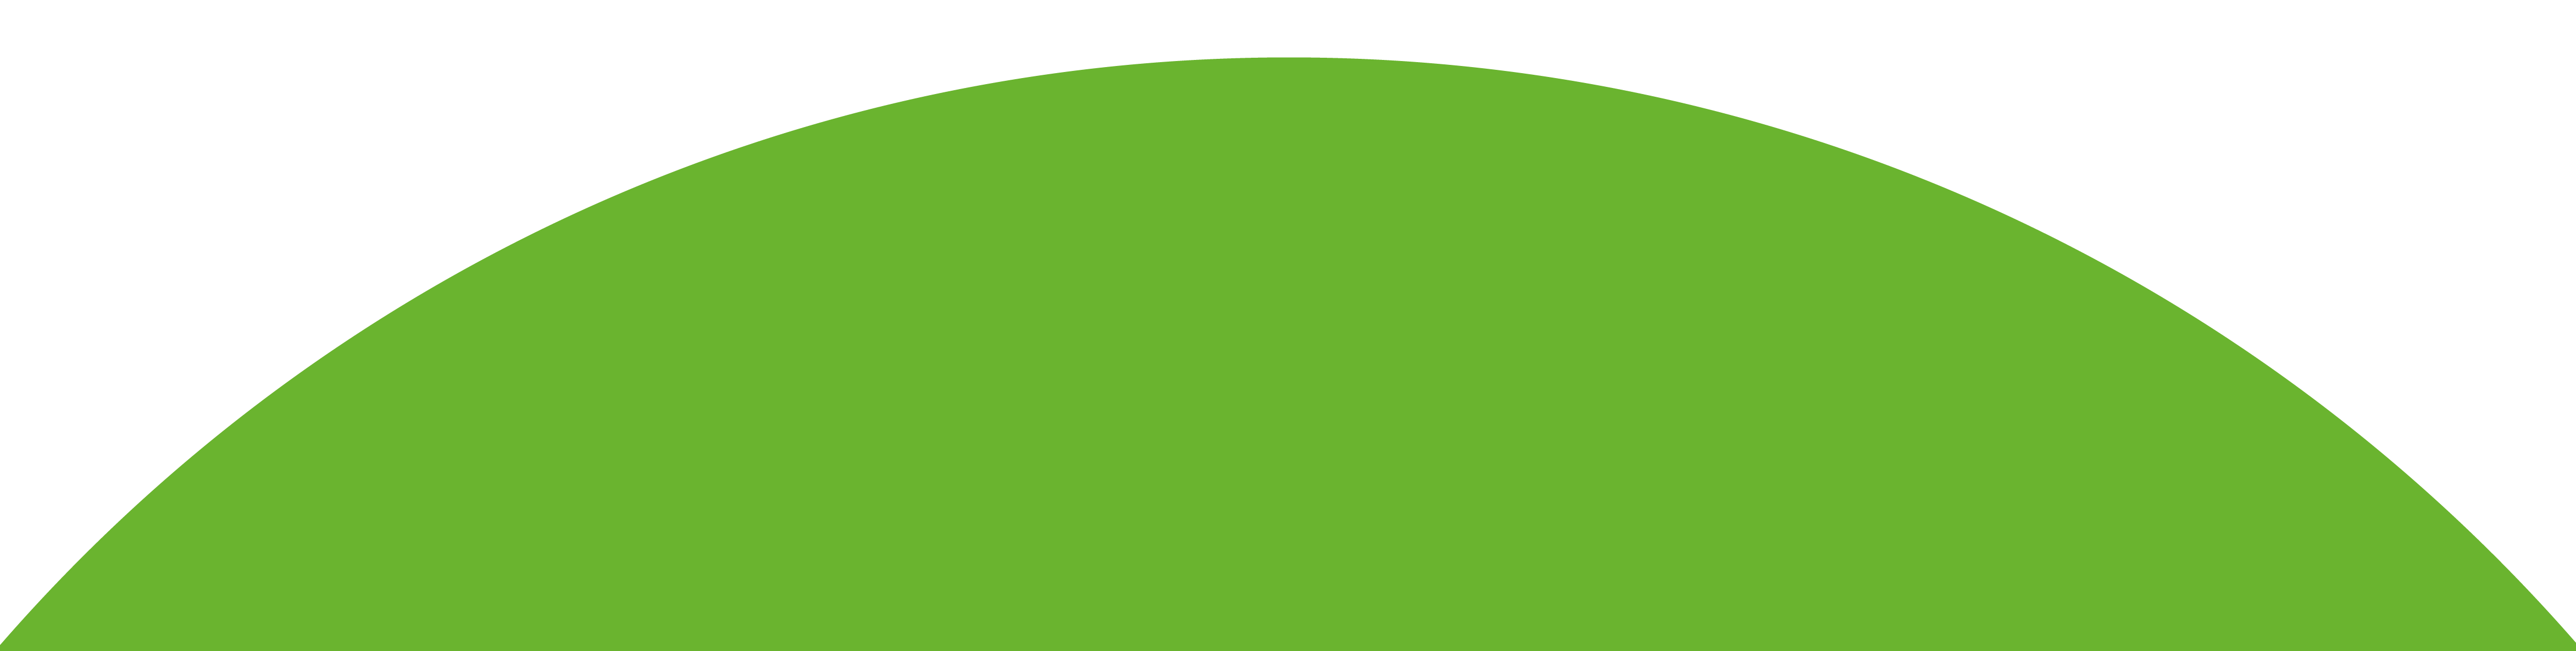 upper green circle